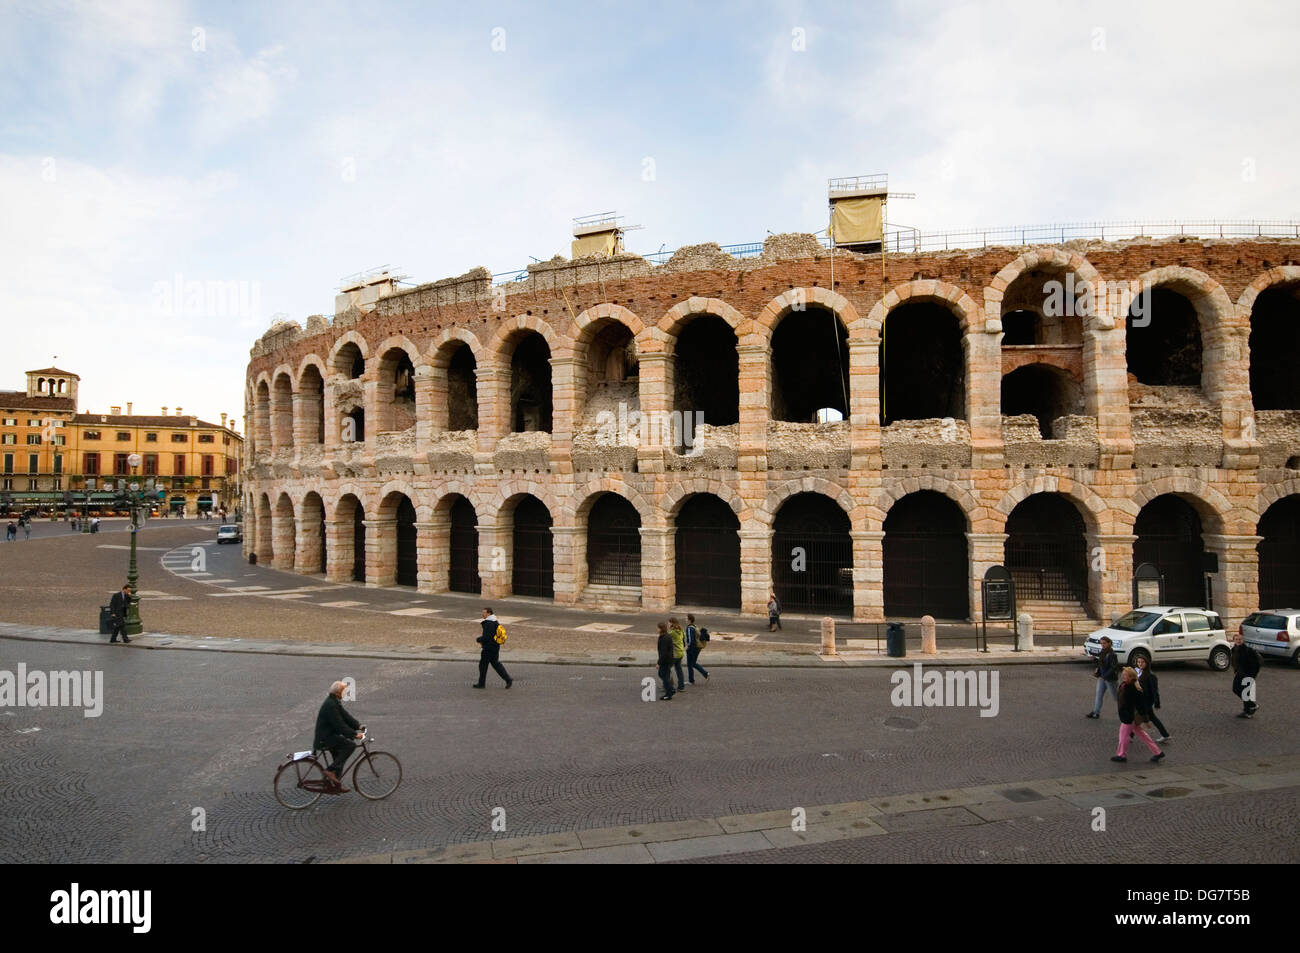 Roman arena, Verona, Italy Stock Photo